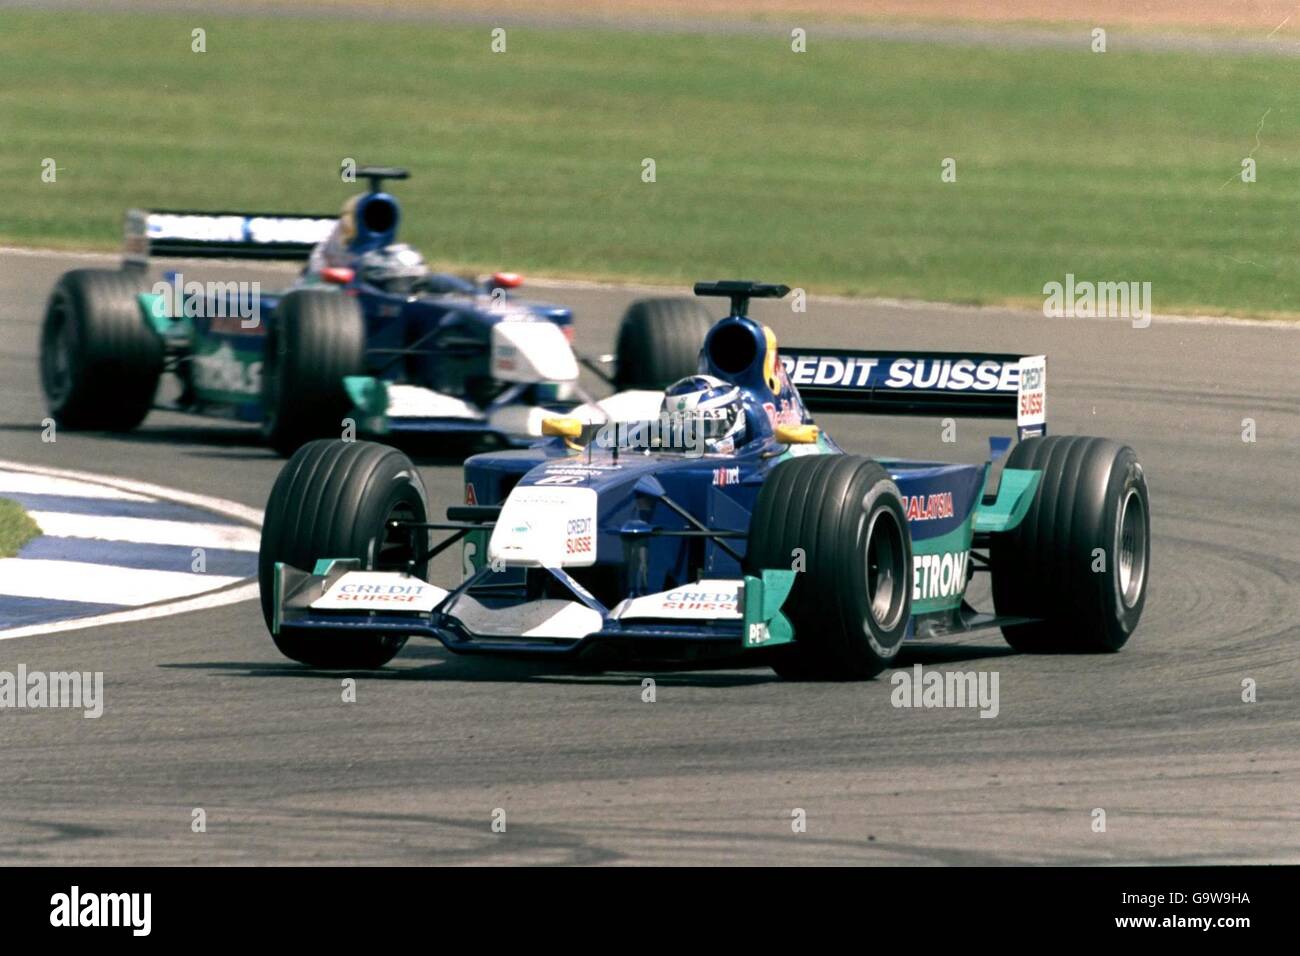 Formula One Motor Racing - British GP - Race Day. Kimi Raikkonen leads Sauber team mate Nick Heidfeld Stock Photo